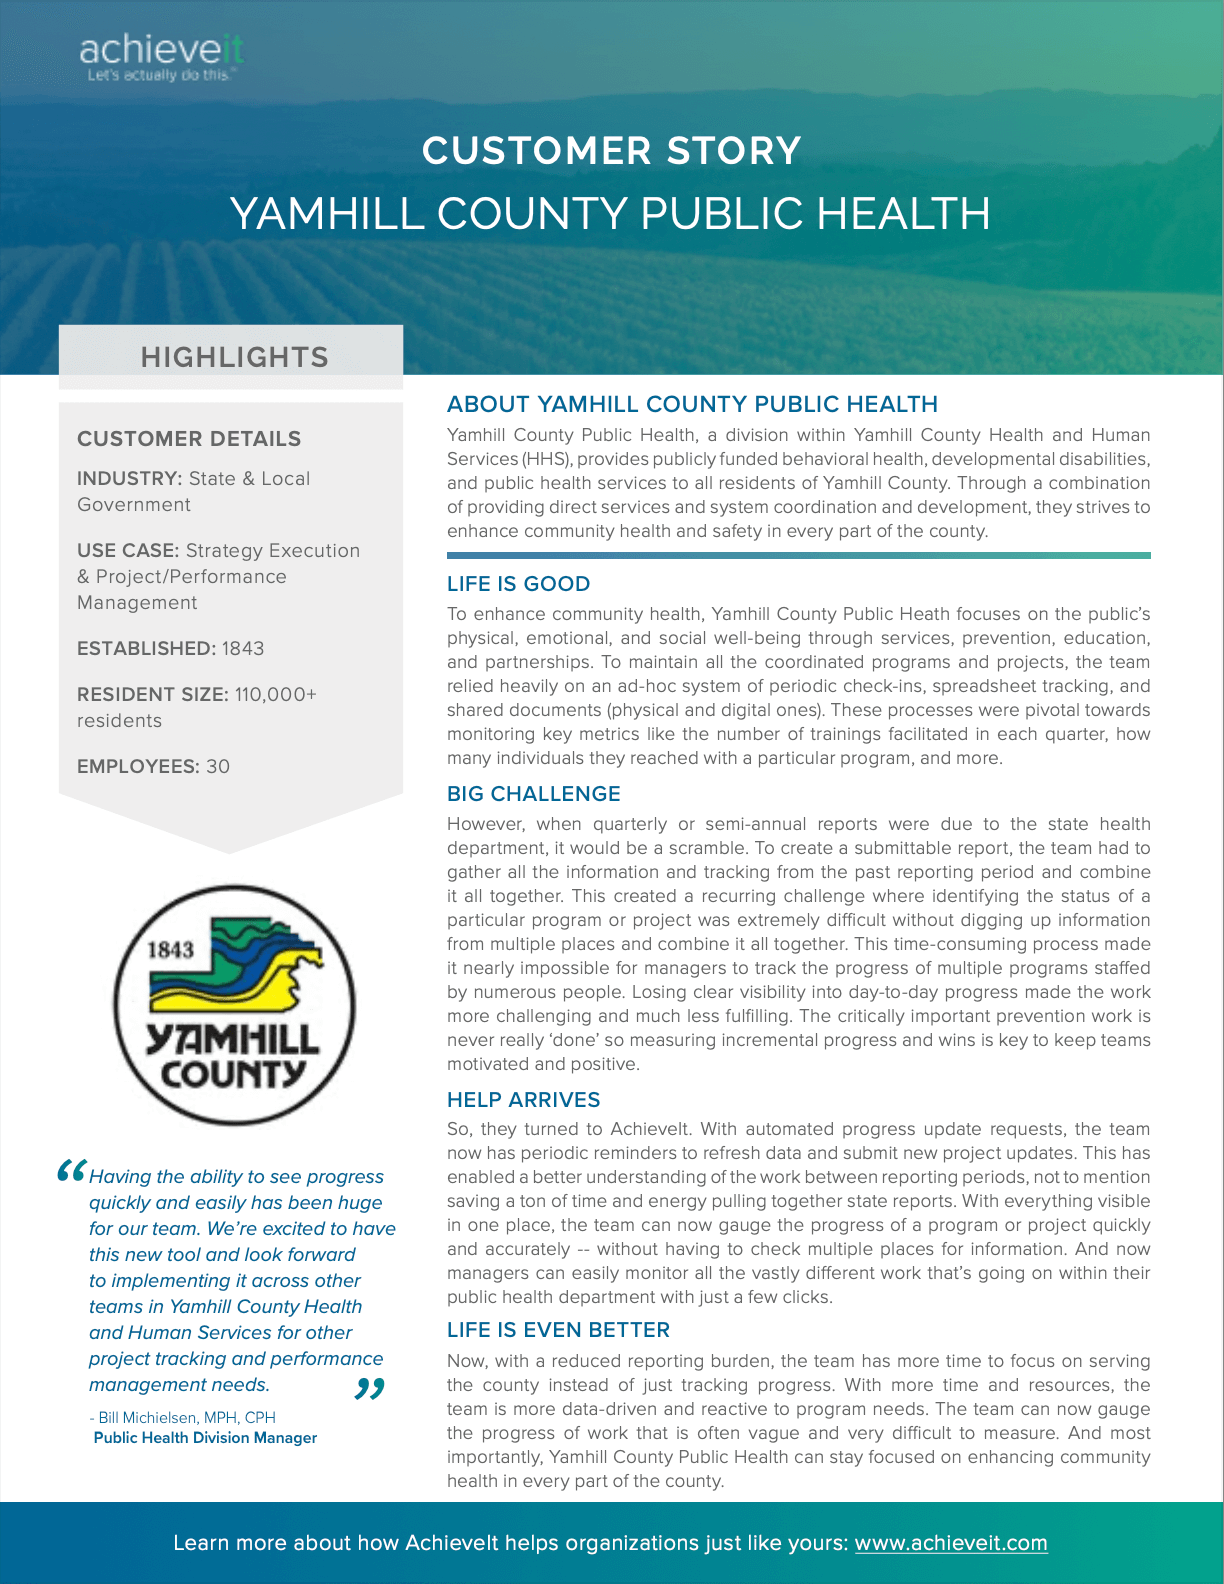 AchieveIt Customer Story Yamhill County Public Health